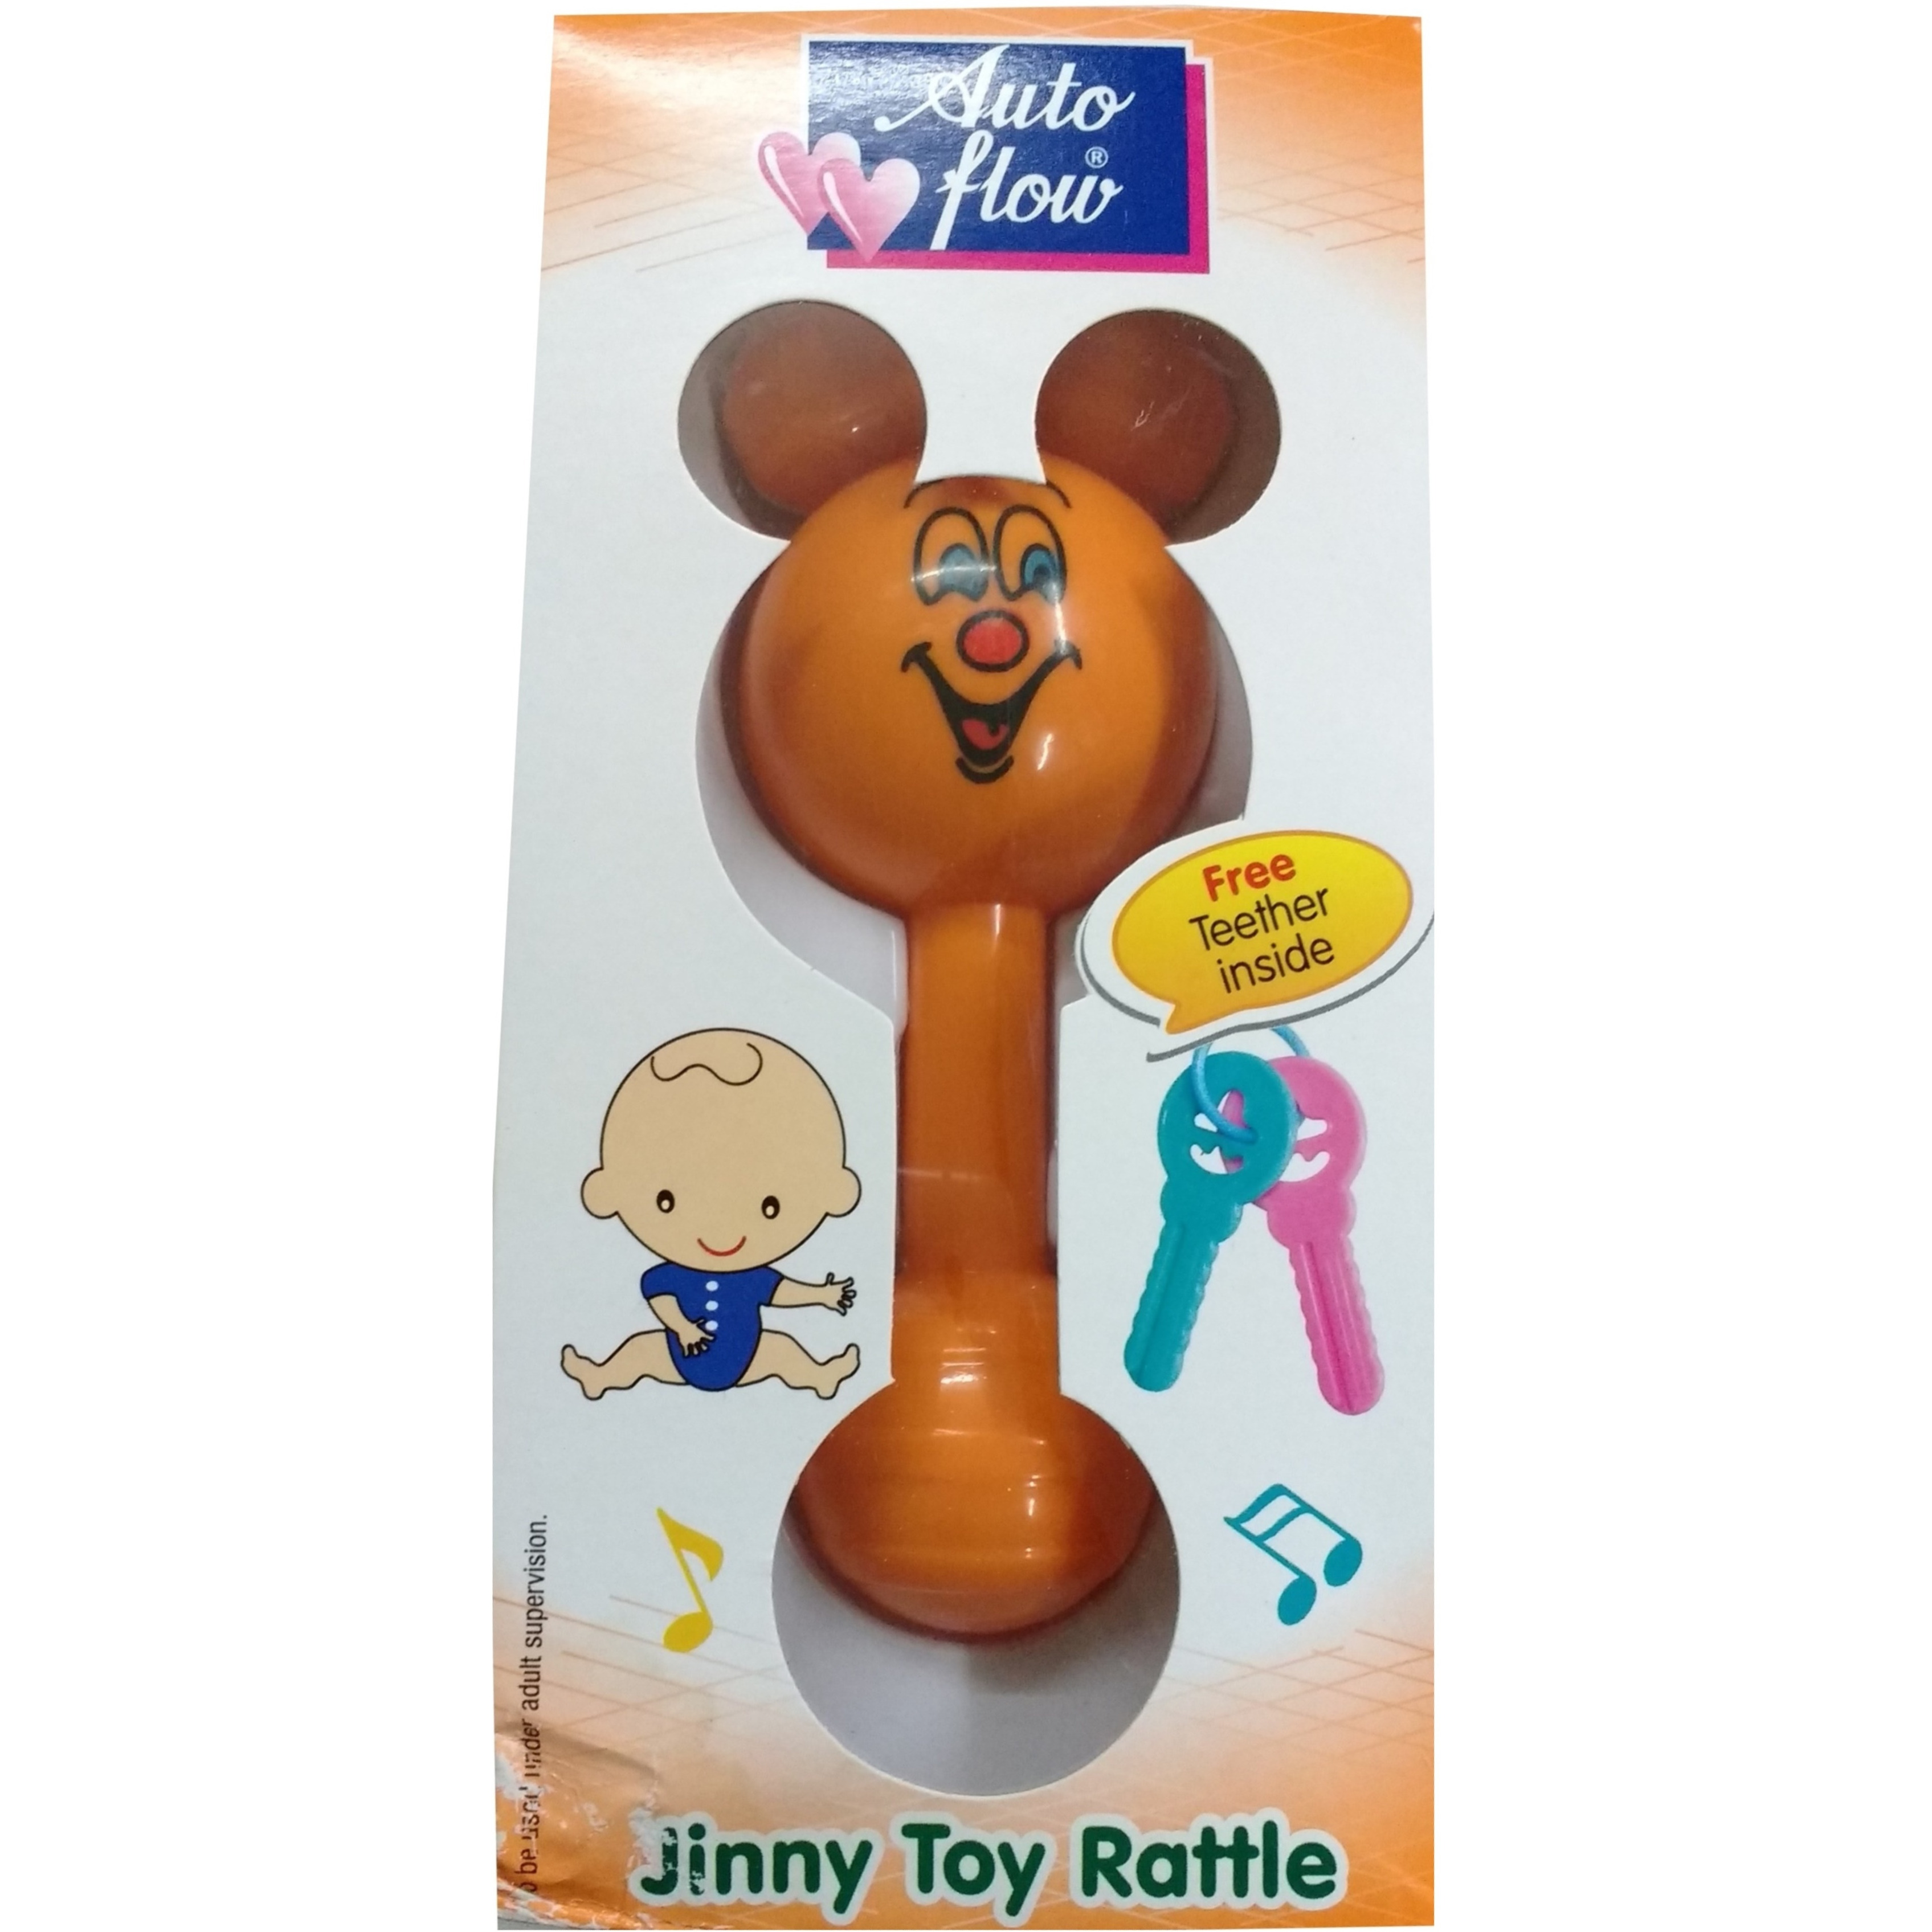 Auto Flow Rattle Toy - Jinny Toy - BT27 Peach